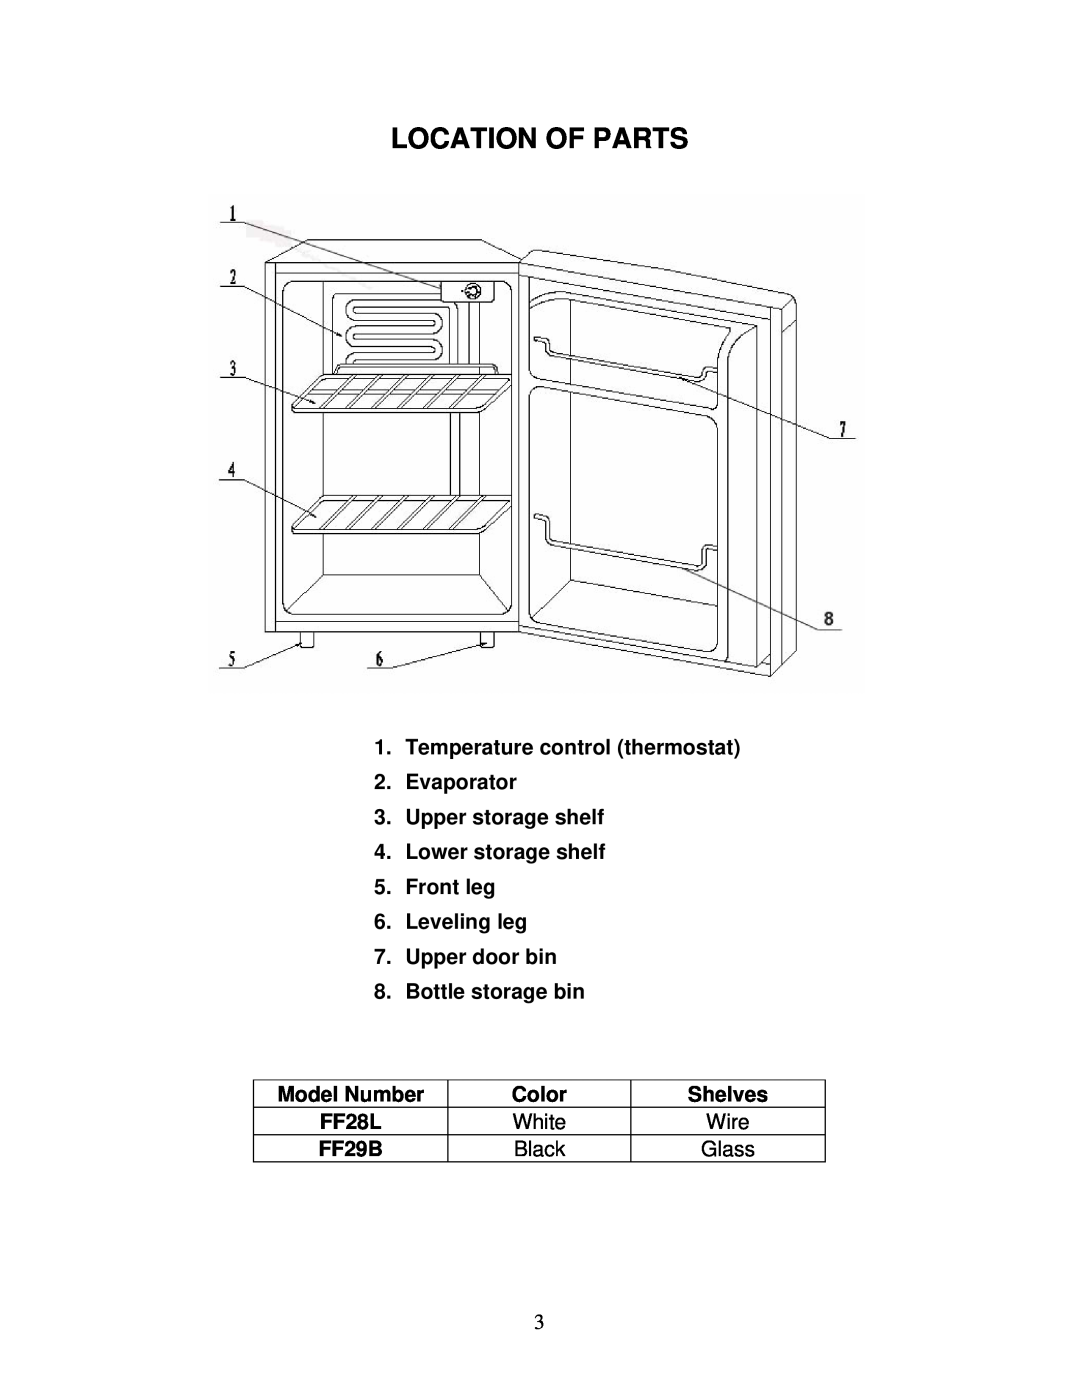 Summit FF28L Location Of Parts, Temperature control thermostat 2.Evaporator, Upper storage shelf 4.Lower storage shelf 